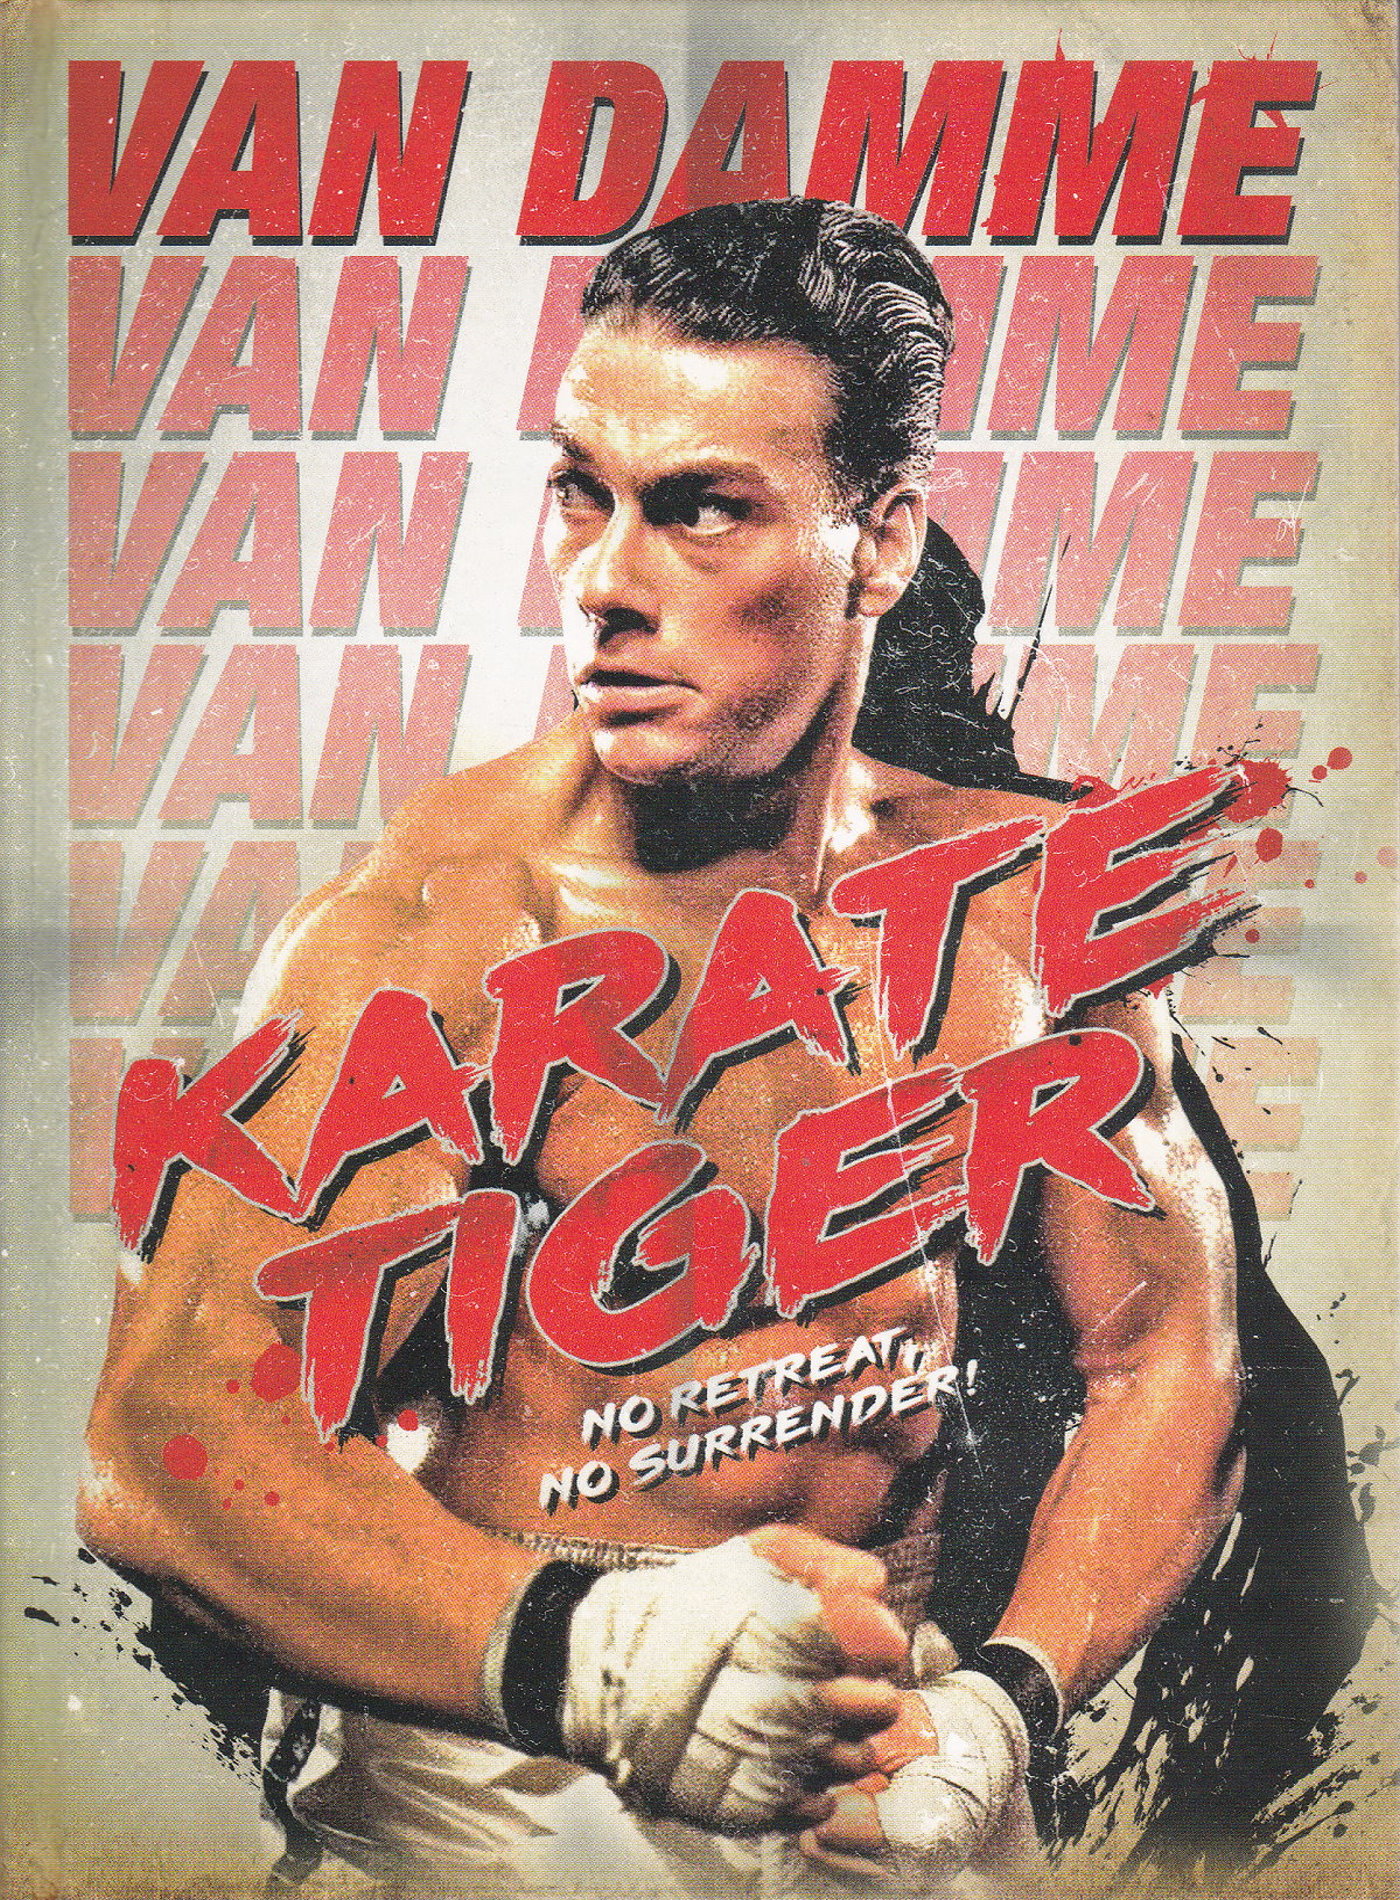 Cover - Karate Tiger.jpg